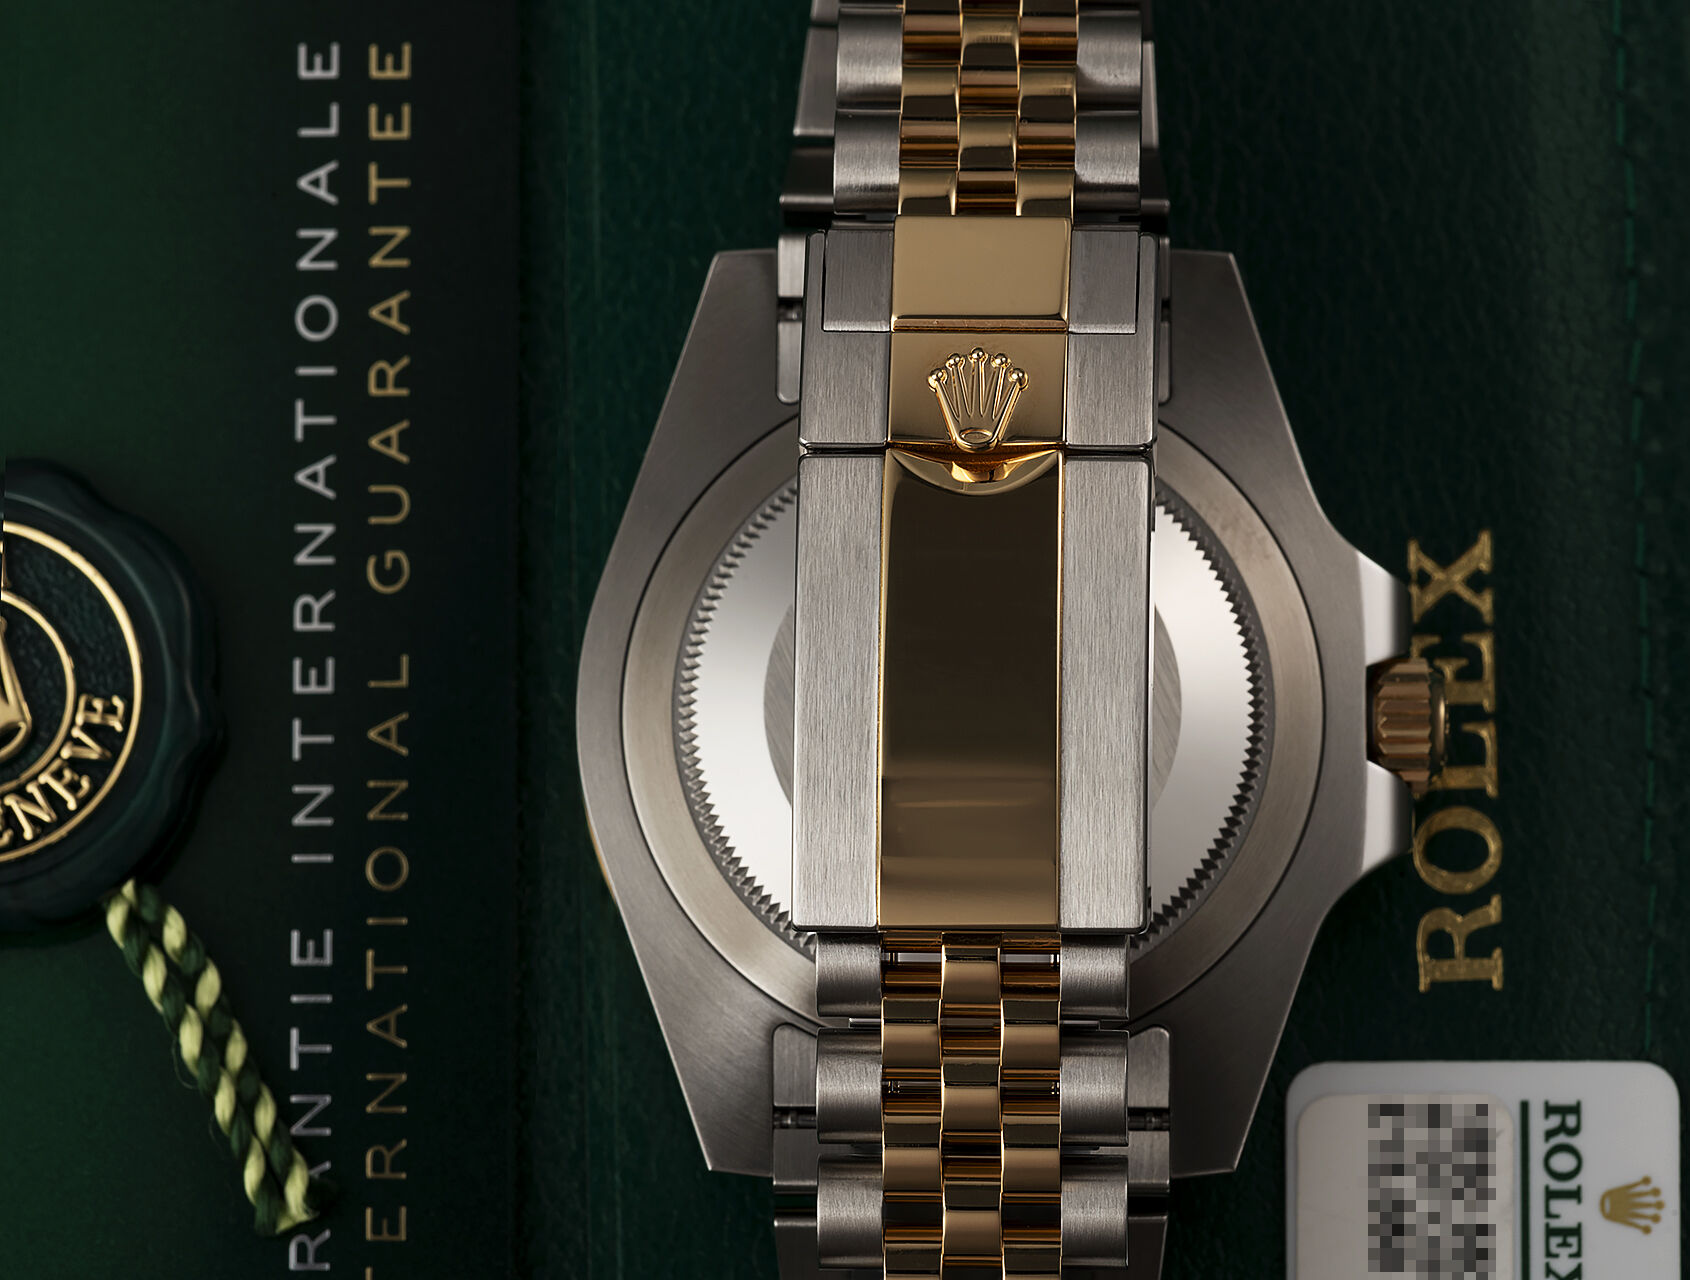 ref 126713GRNR | 126713GRNR - Brand New | Rolex GMT-Master II